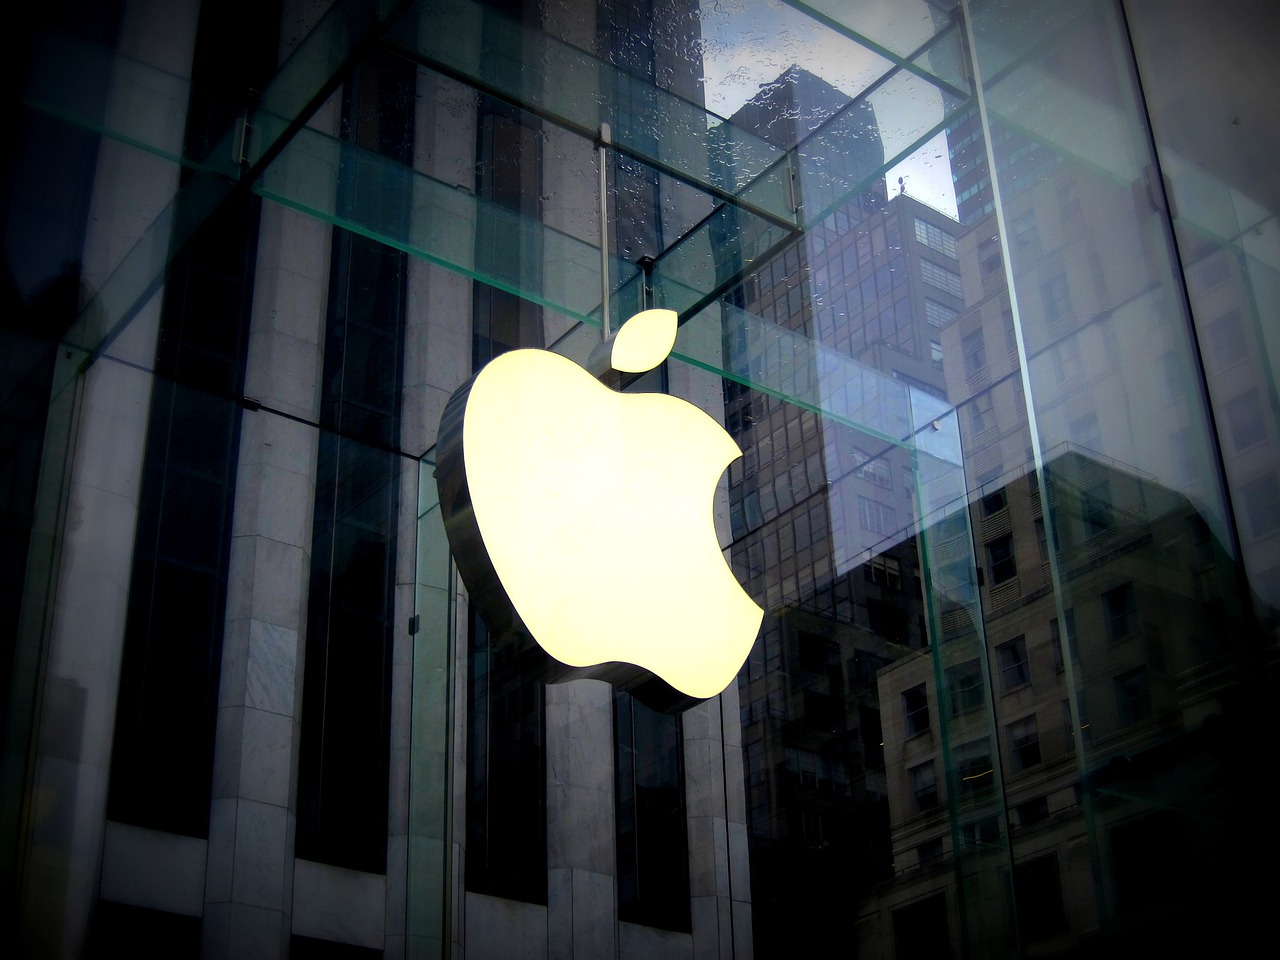 Apple Kembangkan Aplikasi Manajemen Kata Sandi